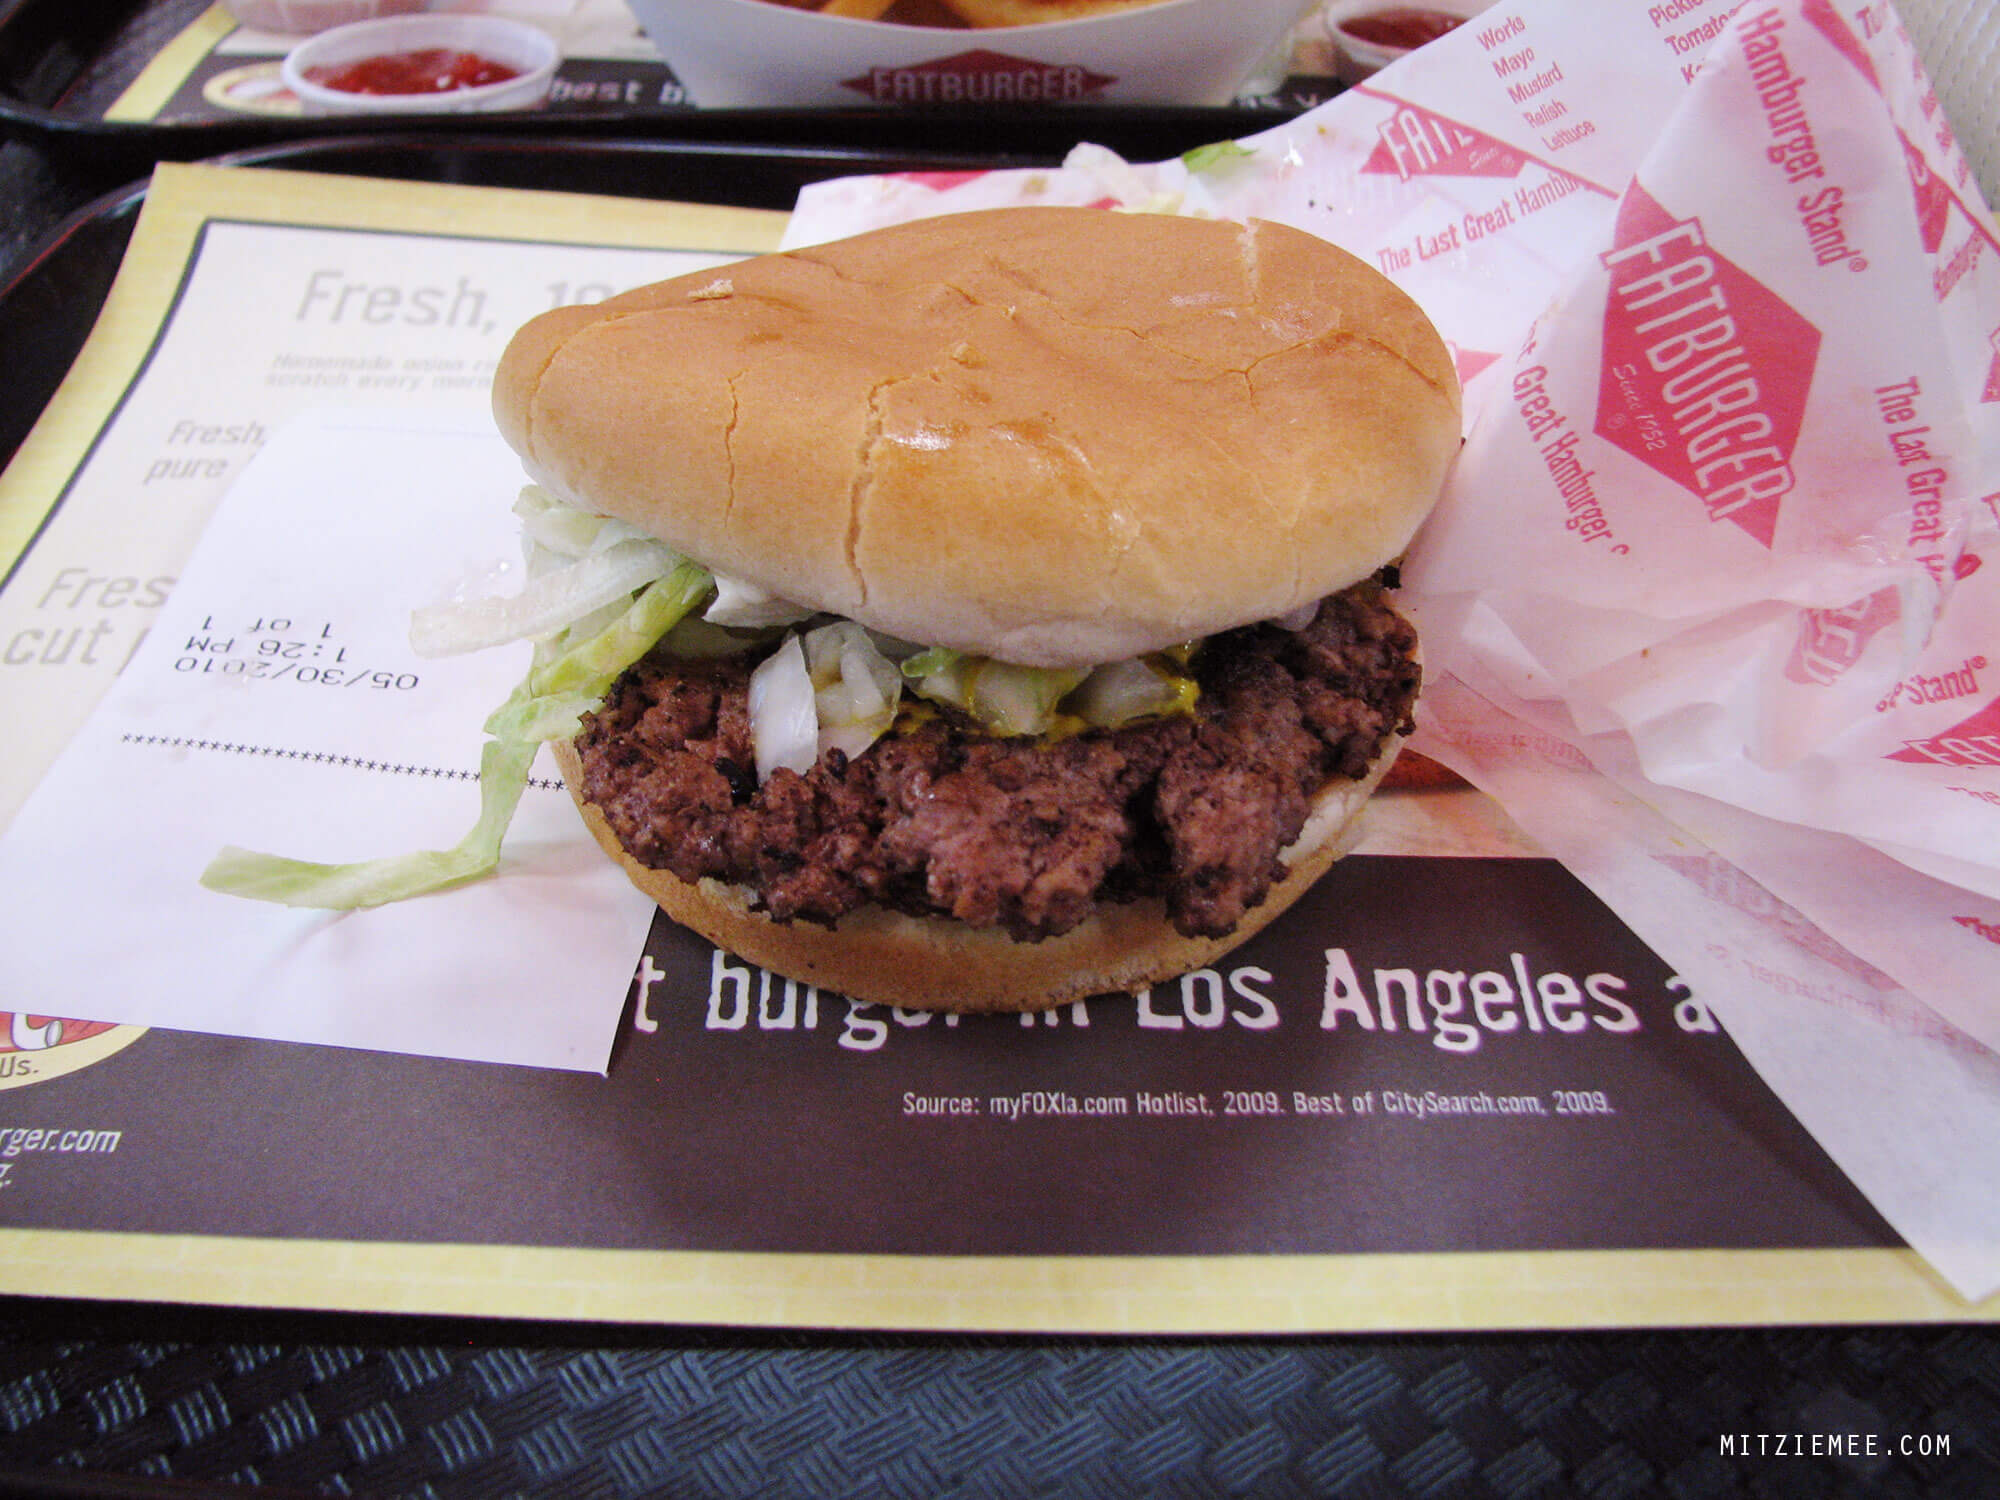 Fatburger on The Strip, Las Vegas